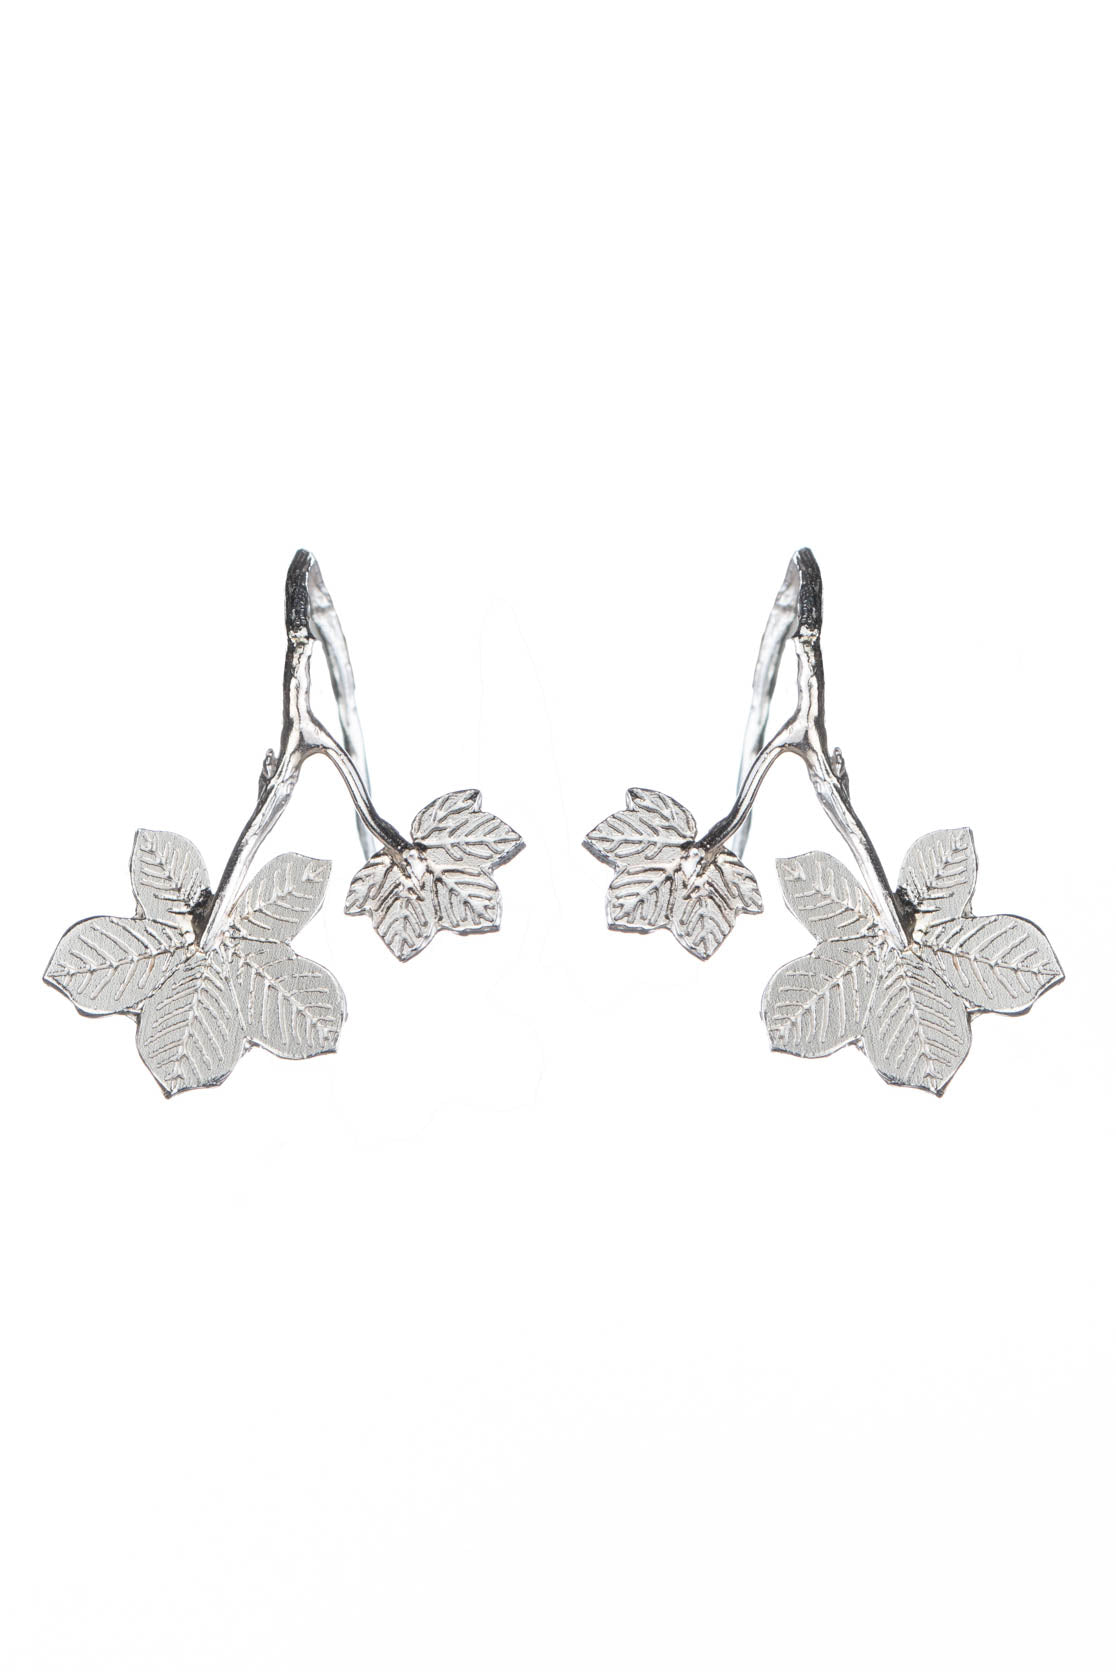 Sycamore Leaf Earrings - hooks